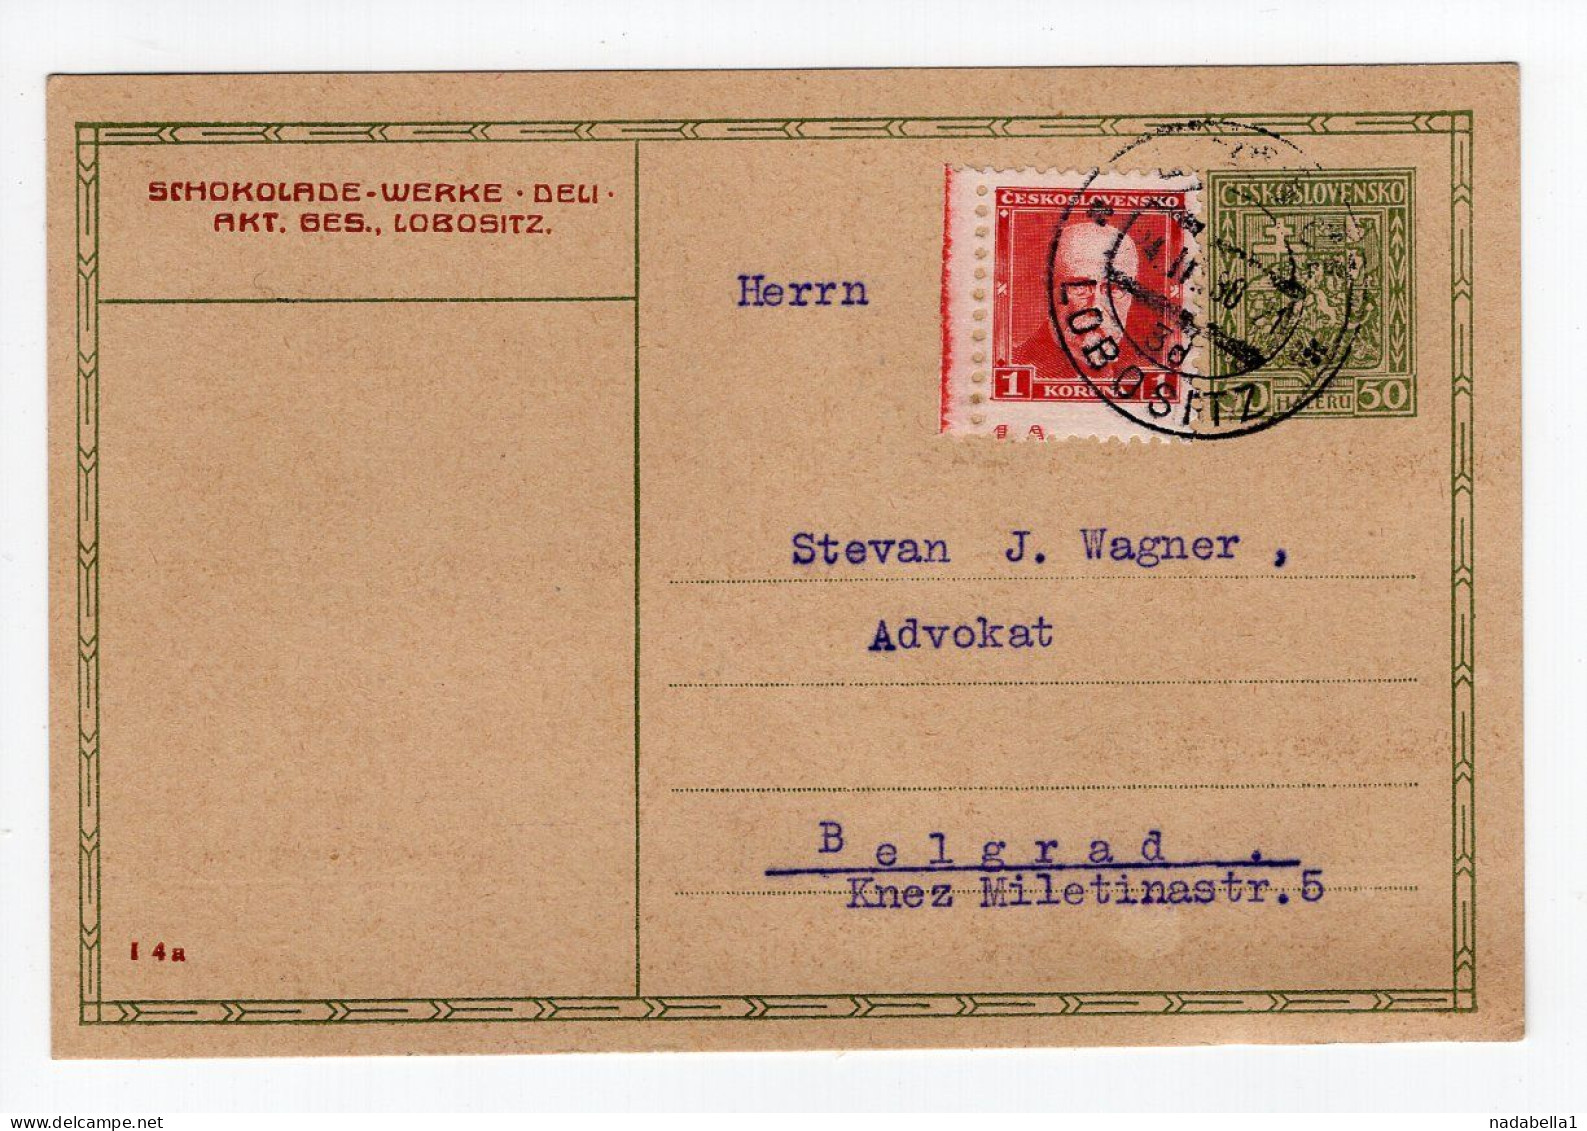 1930. CZECHOSLOVAKIA,LOBOSITZ,DELI CHOCOLATE FACTORY,STATIONERY CARD,USED TO BELGRADE,YUGOSLAVIA - Cartes Postales